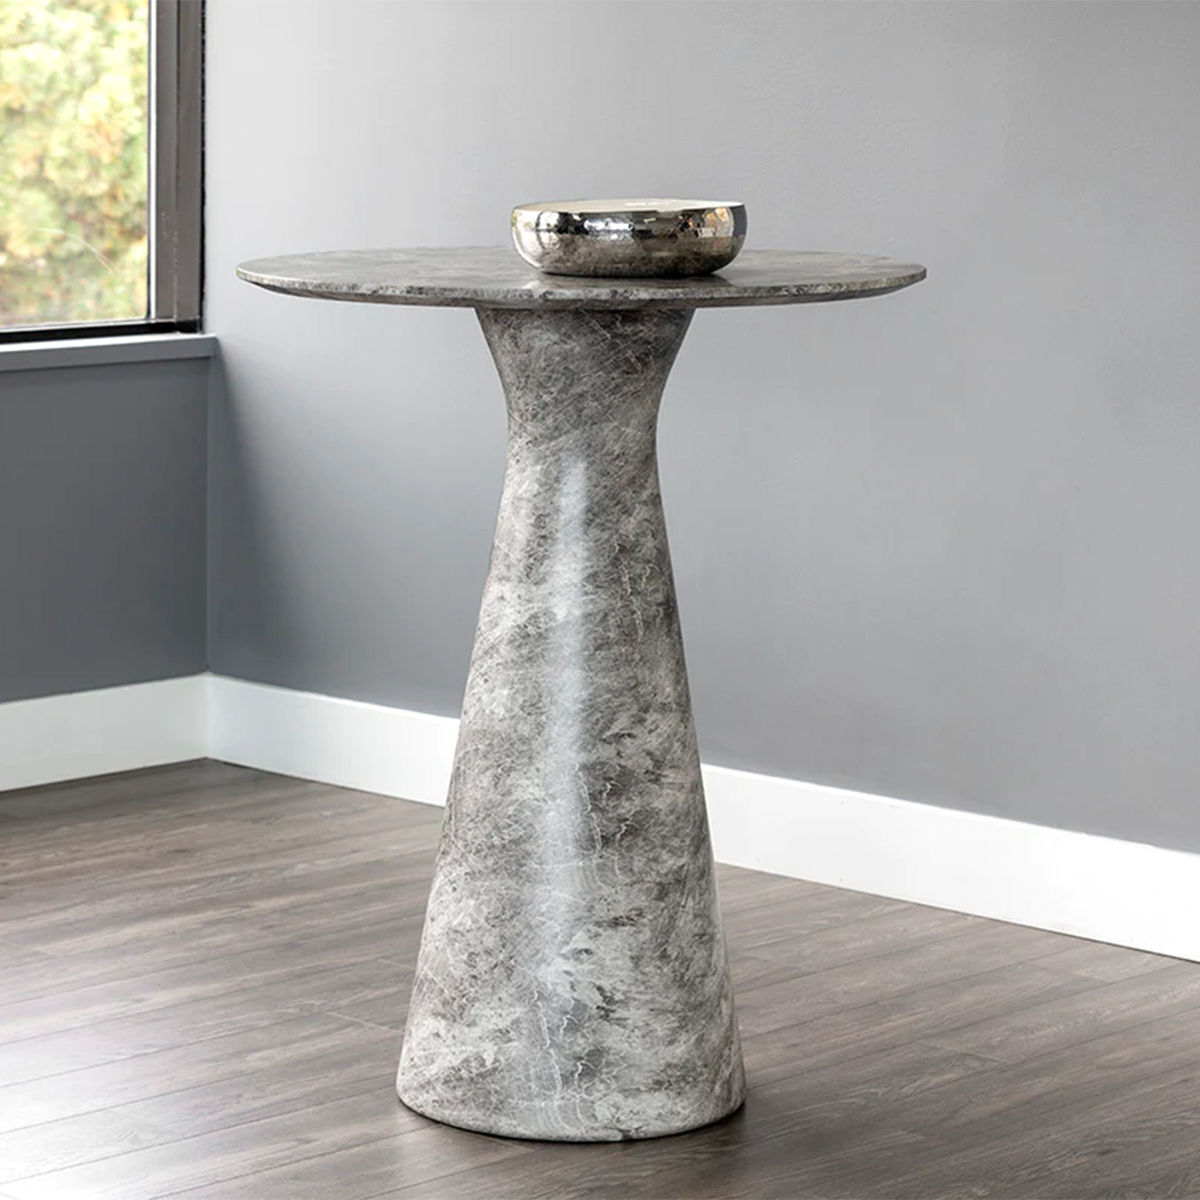 shelburne marble look bar table by sunpan gray